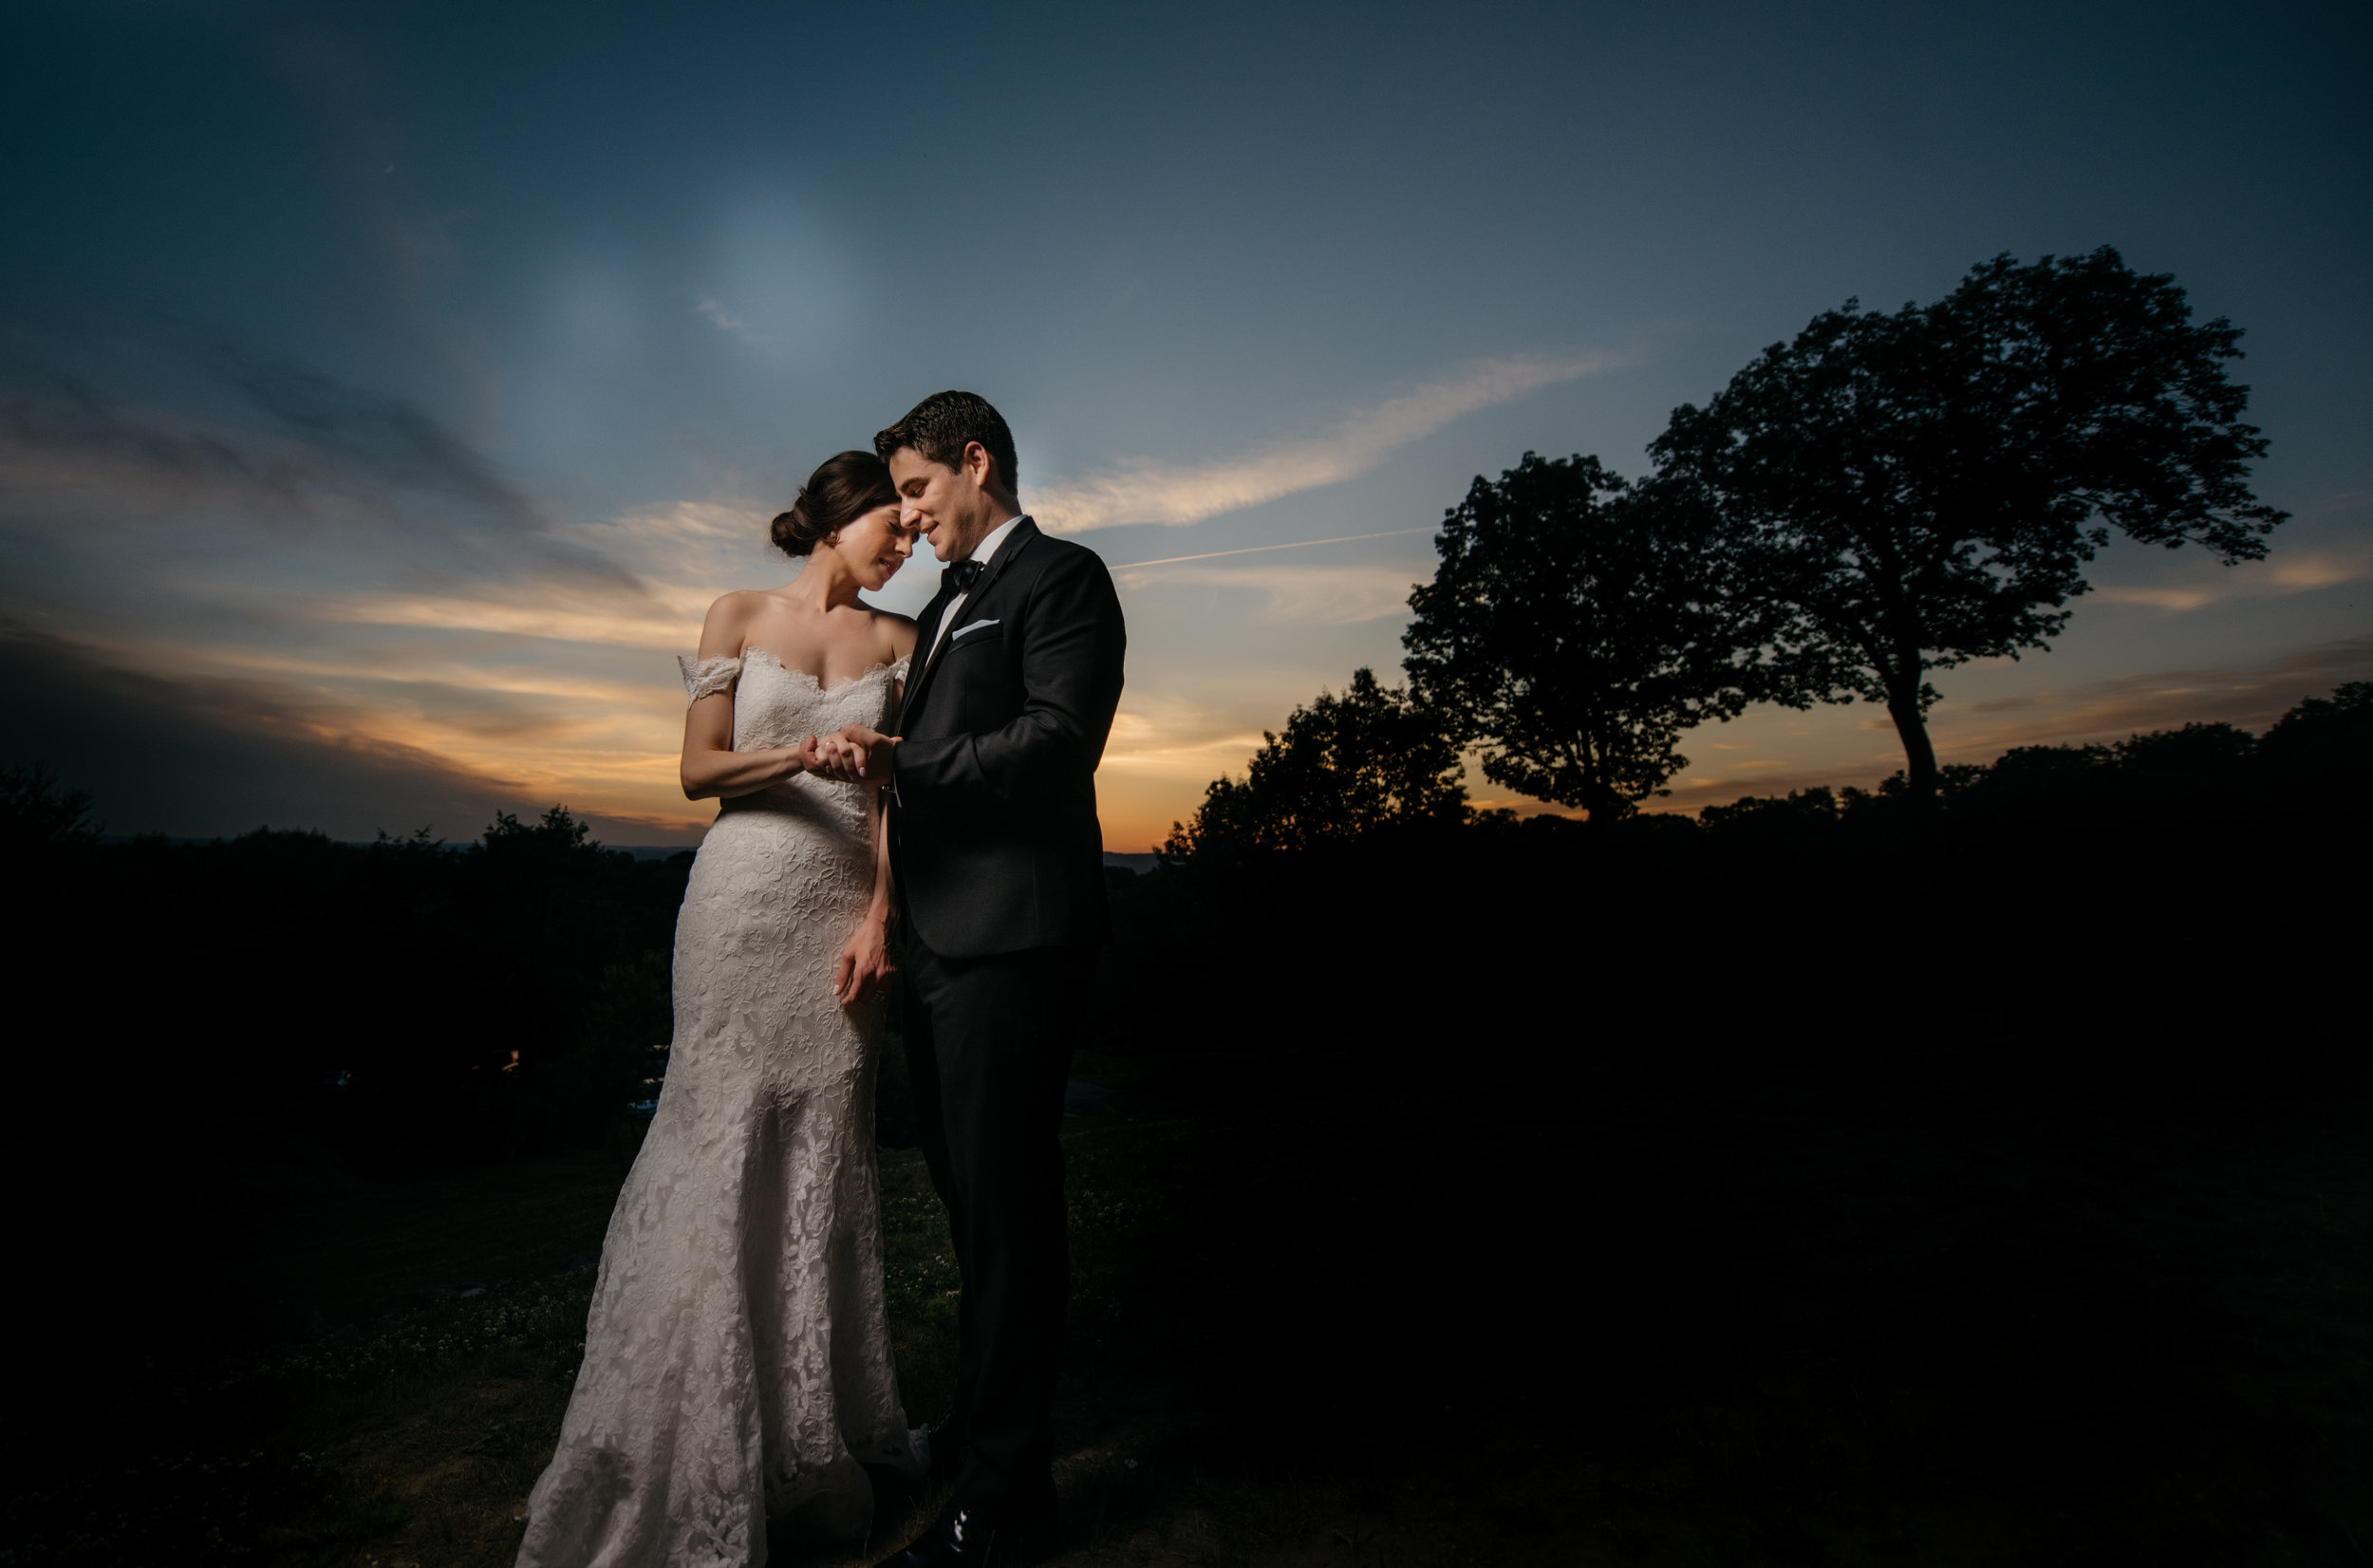 WeddingPhotos | NJPhotographer | Highlights-9-3.jpg